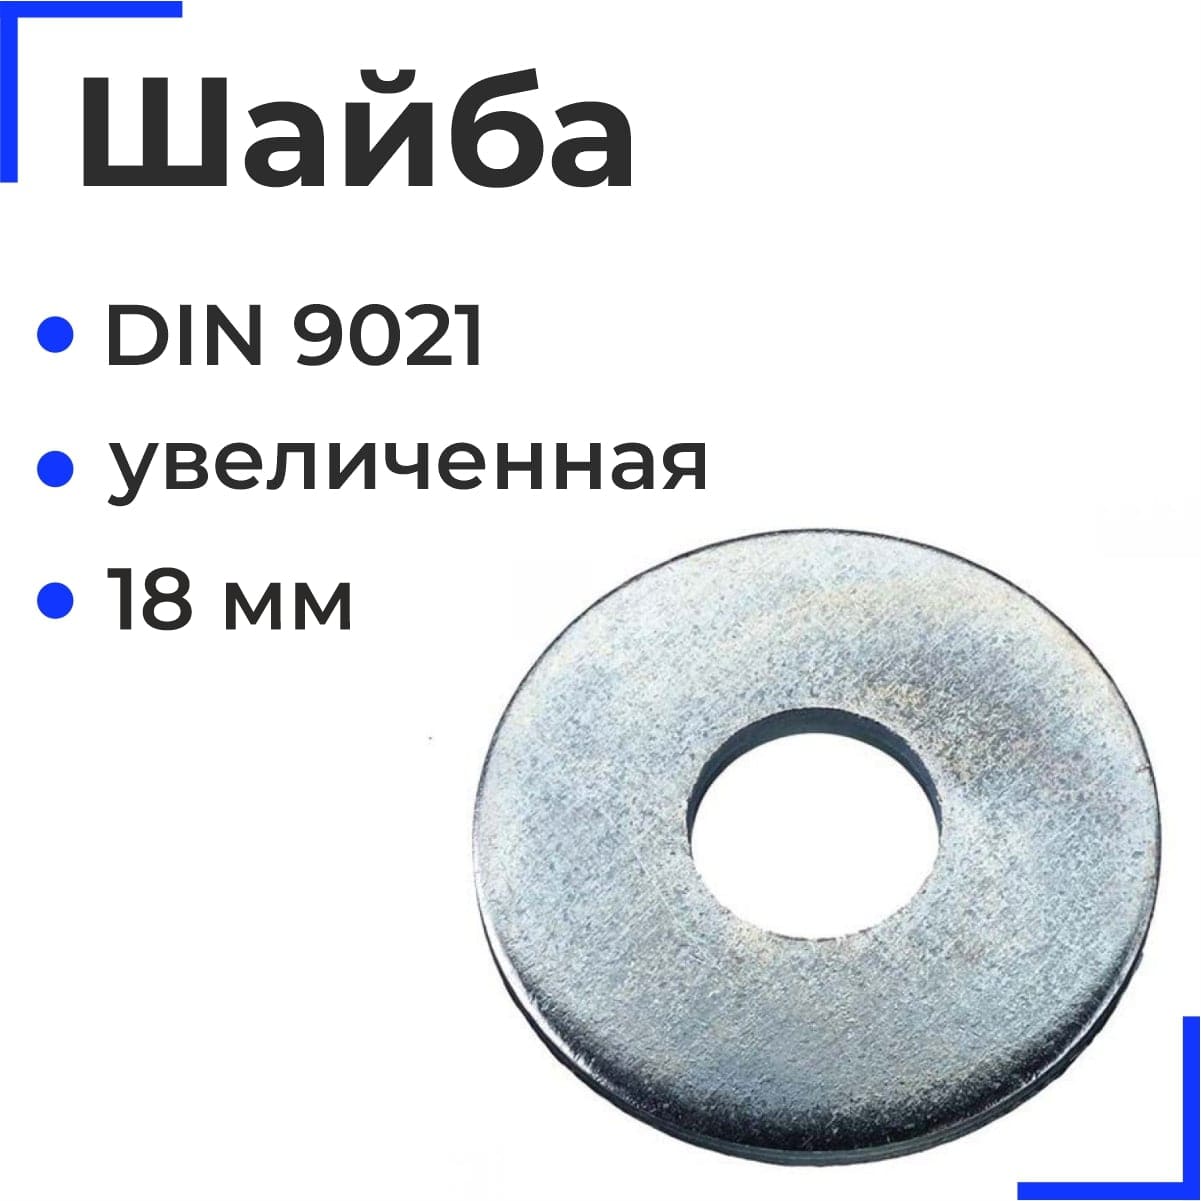 Шайба М18 DIN 9021 увеличенная, оцинк. (25кг.)